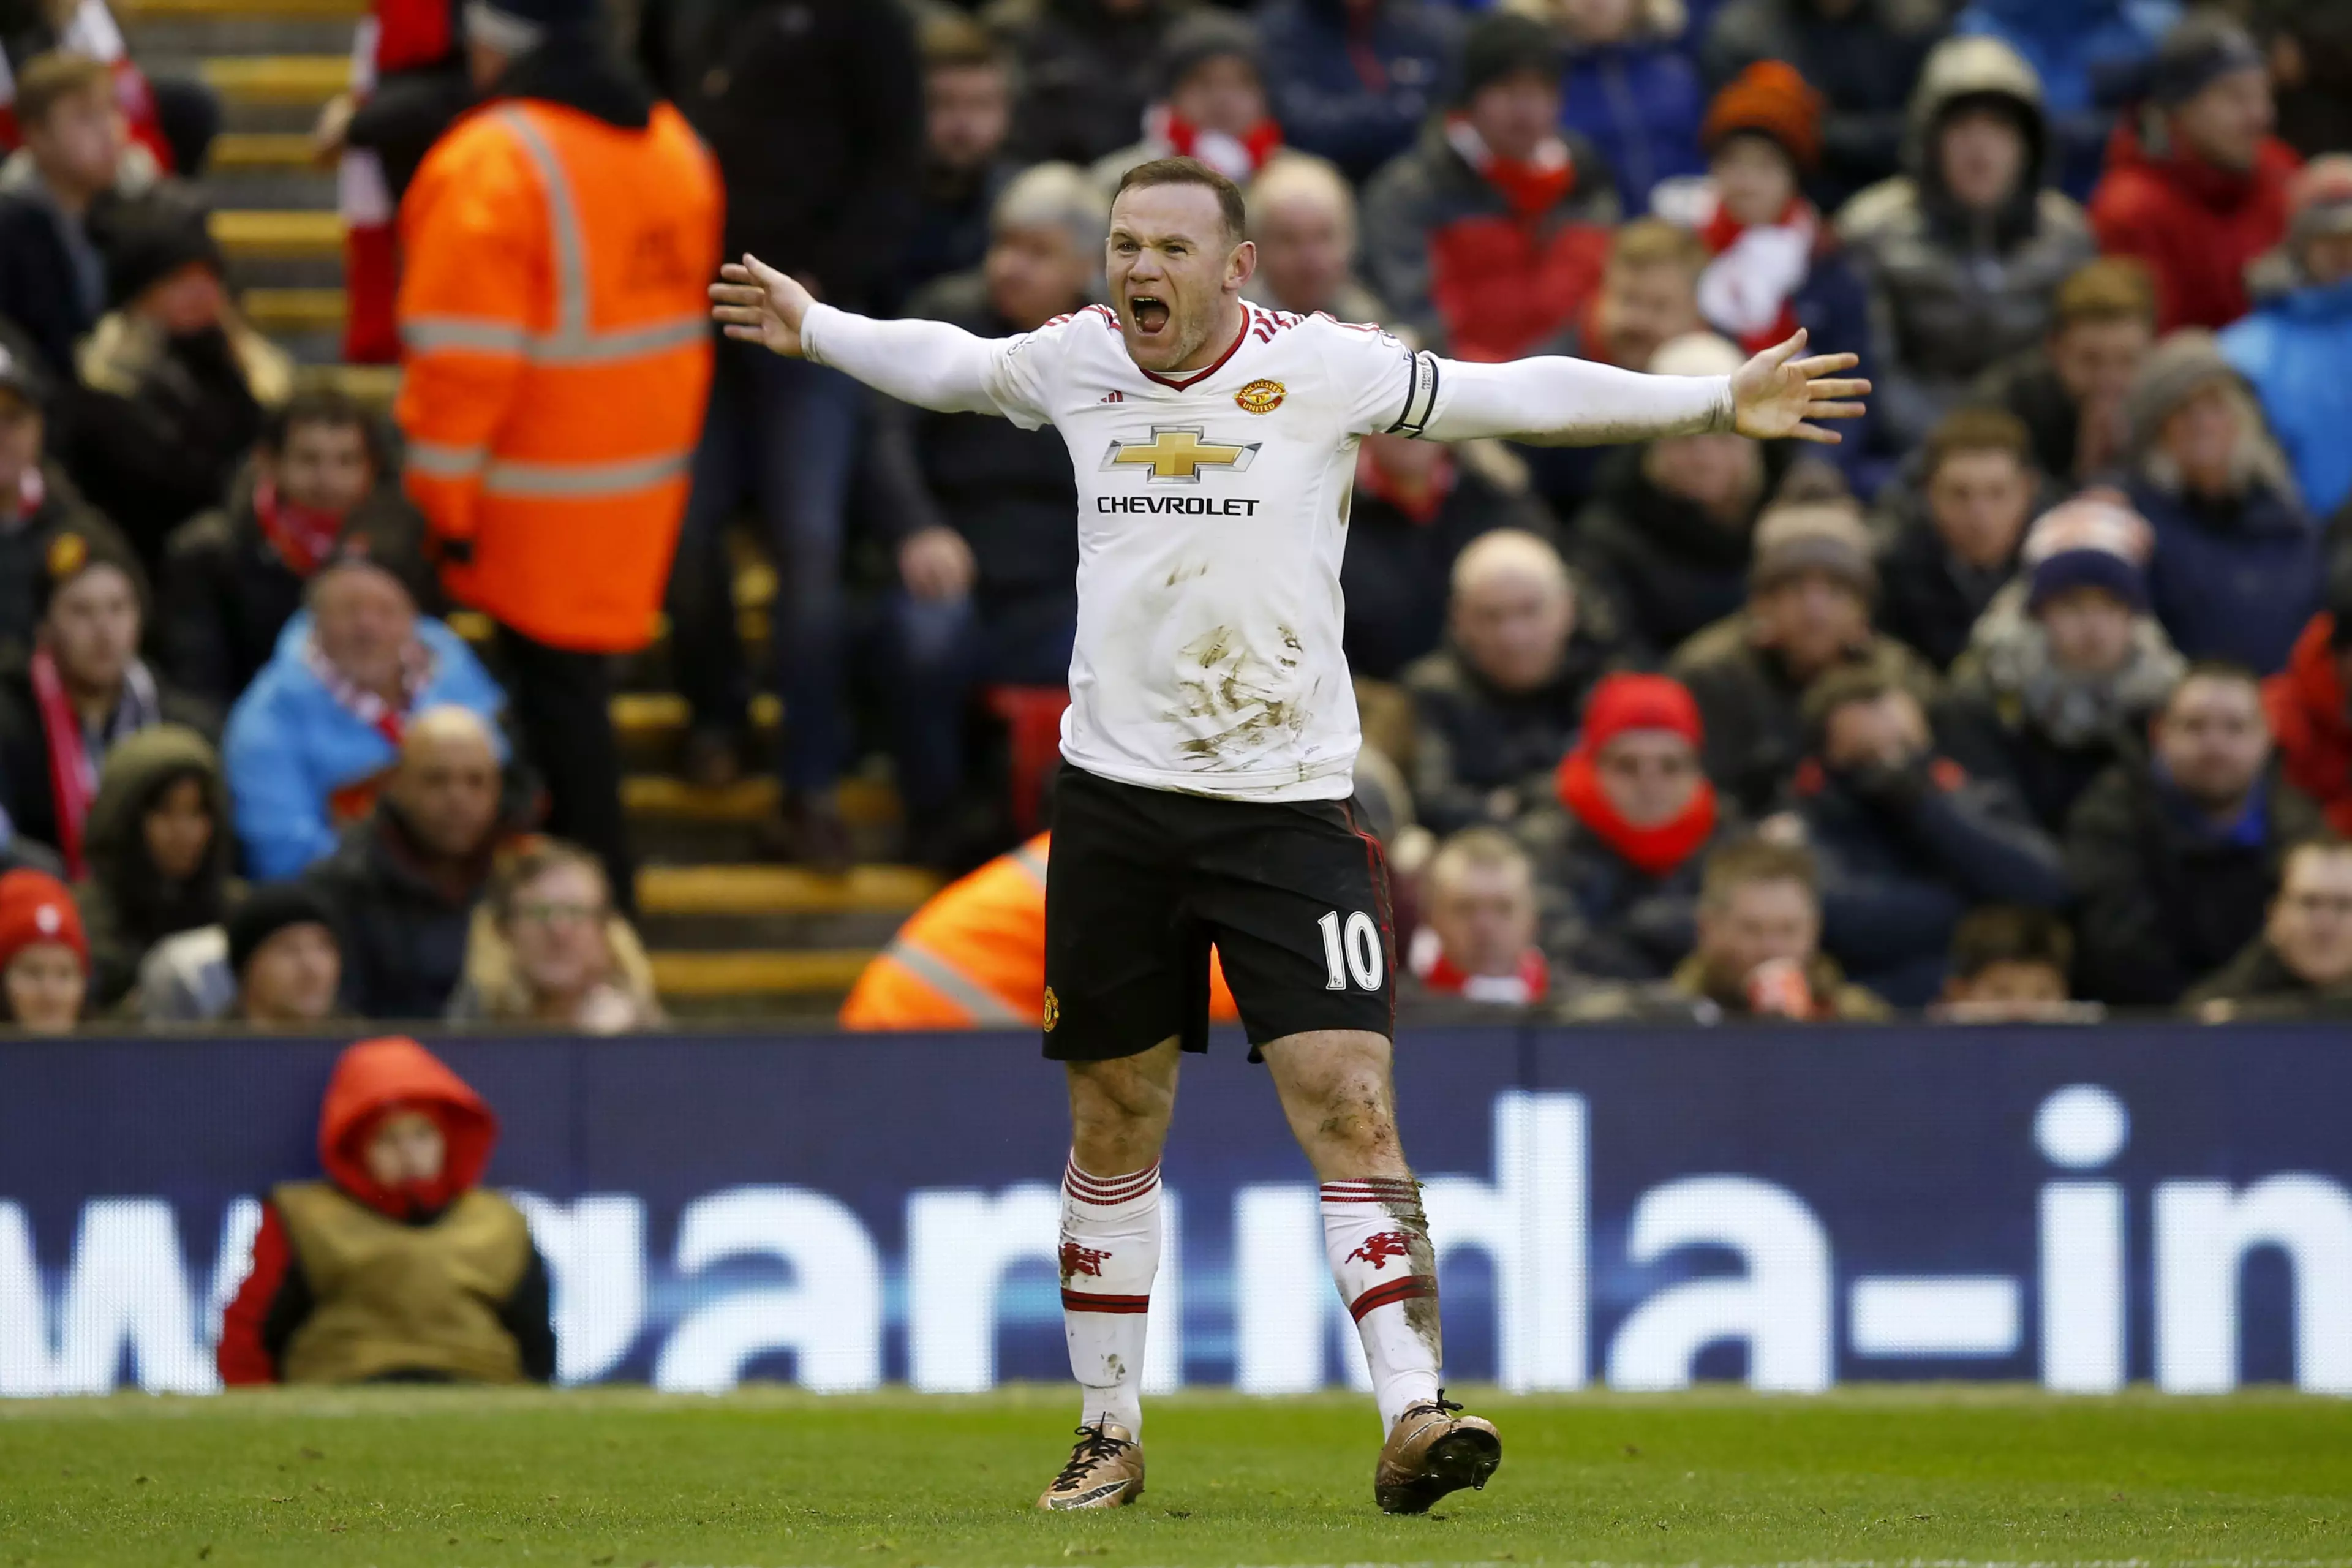 Rooney celebrates scoring at Anfield. Image: PA Images